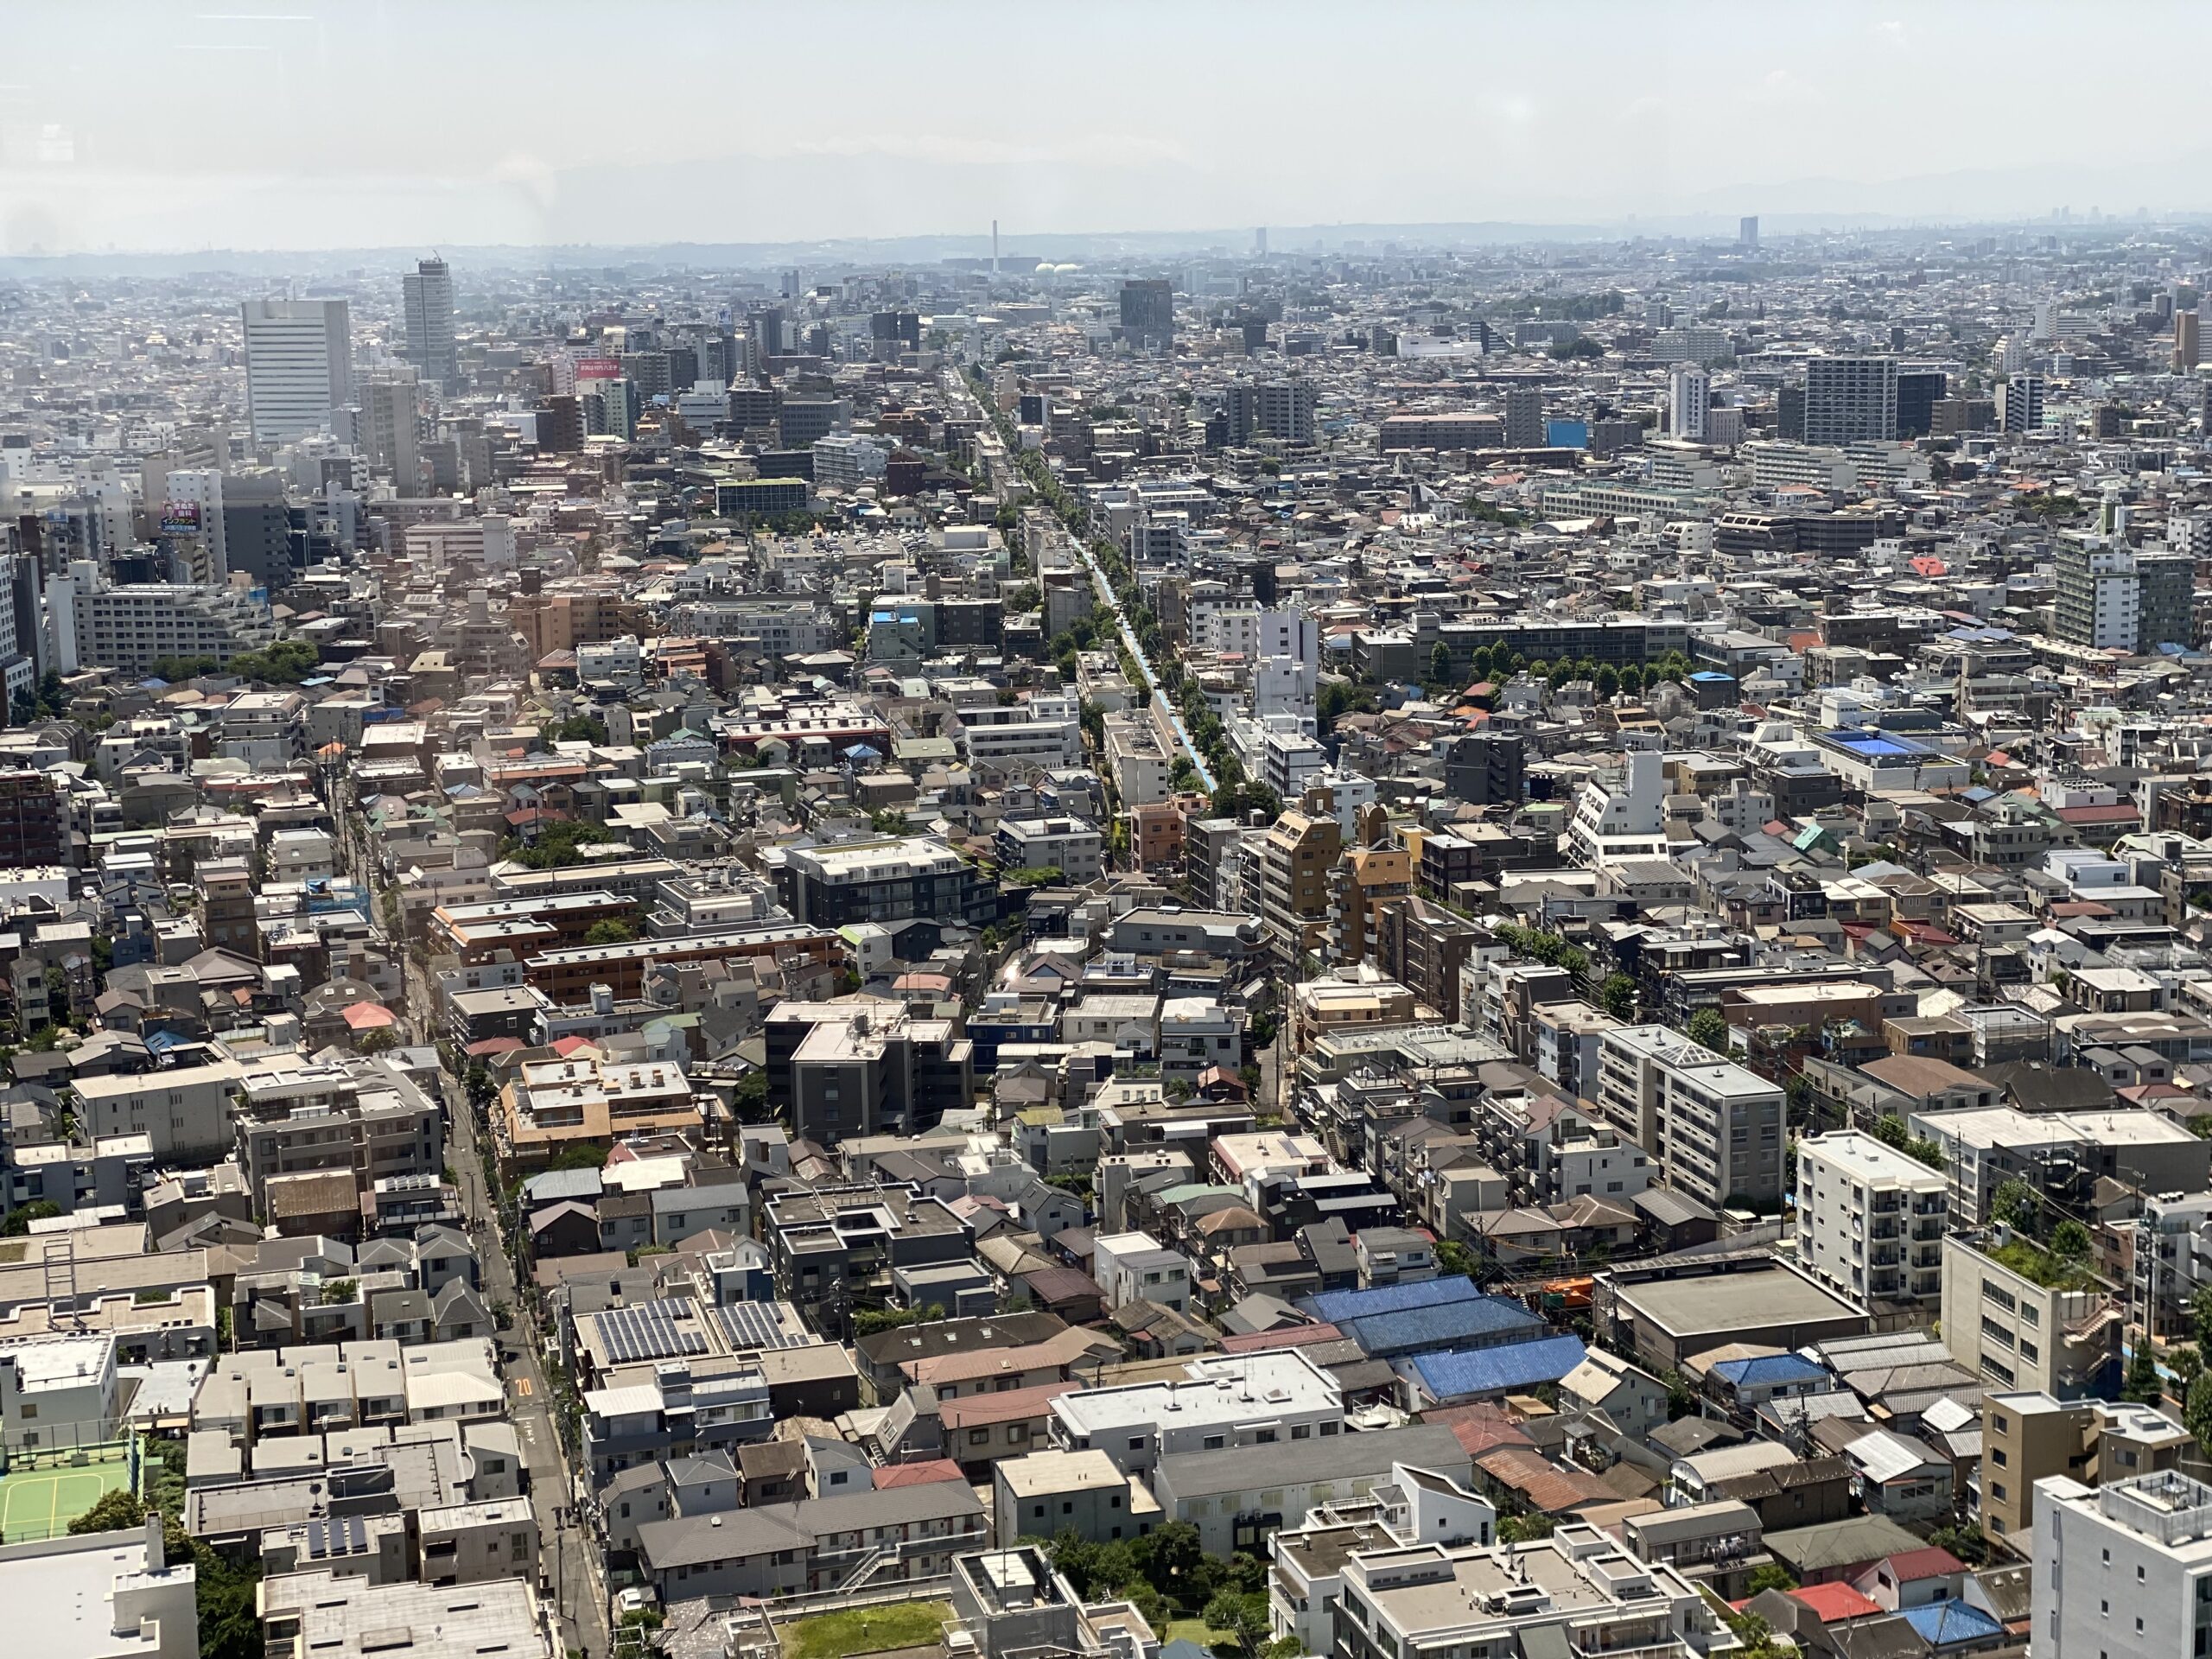 City of Tokyo (Photo by Kay Koyama)